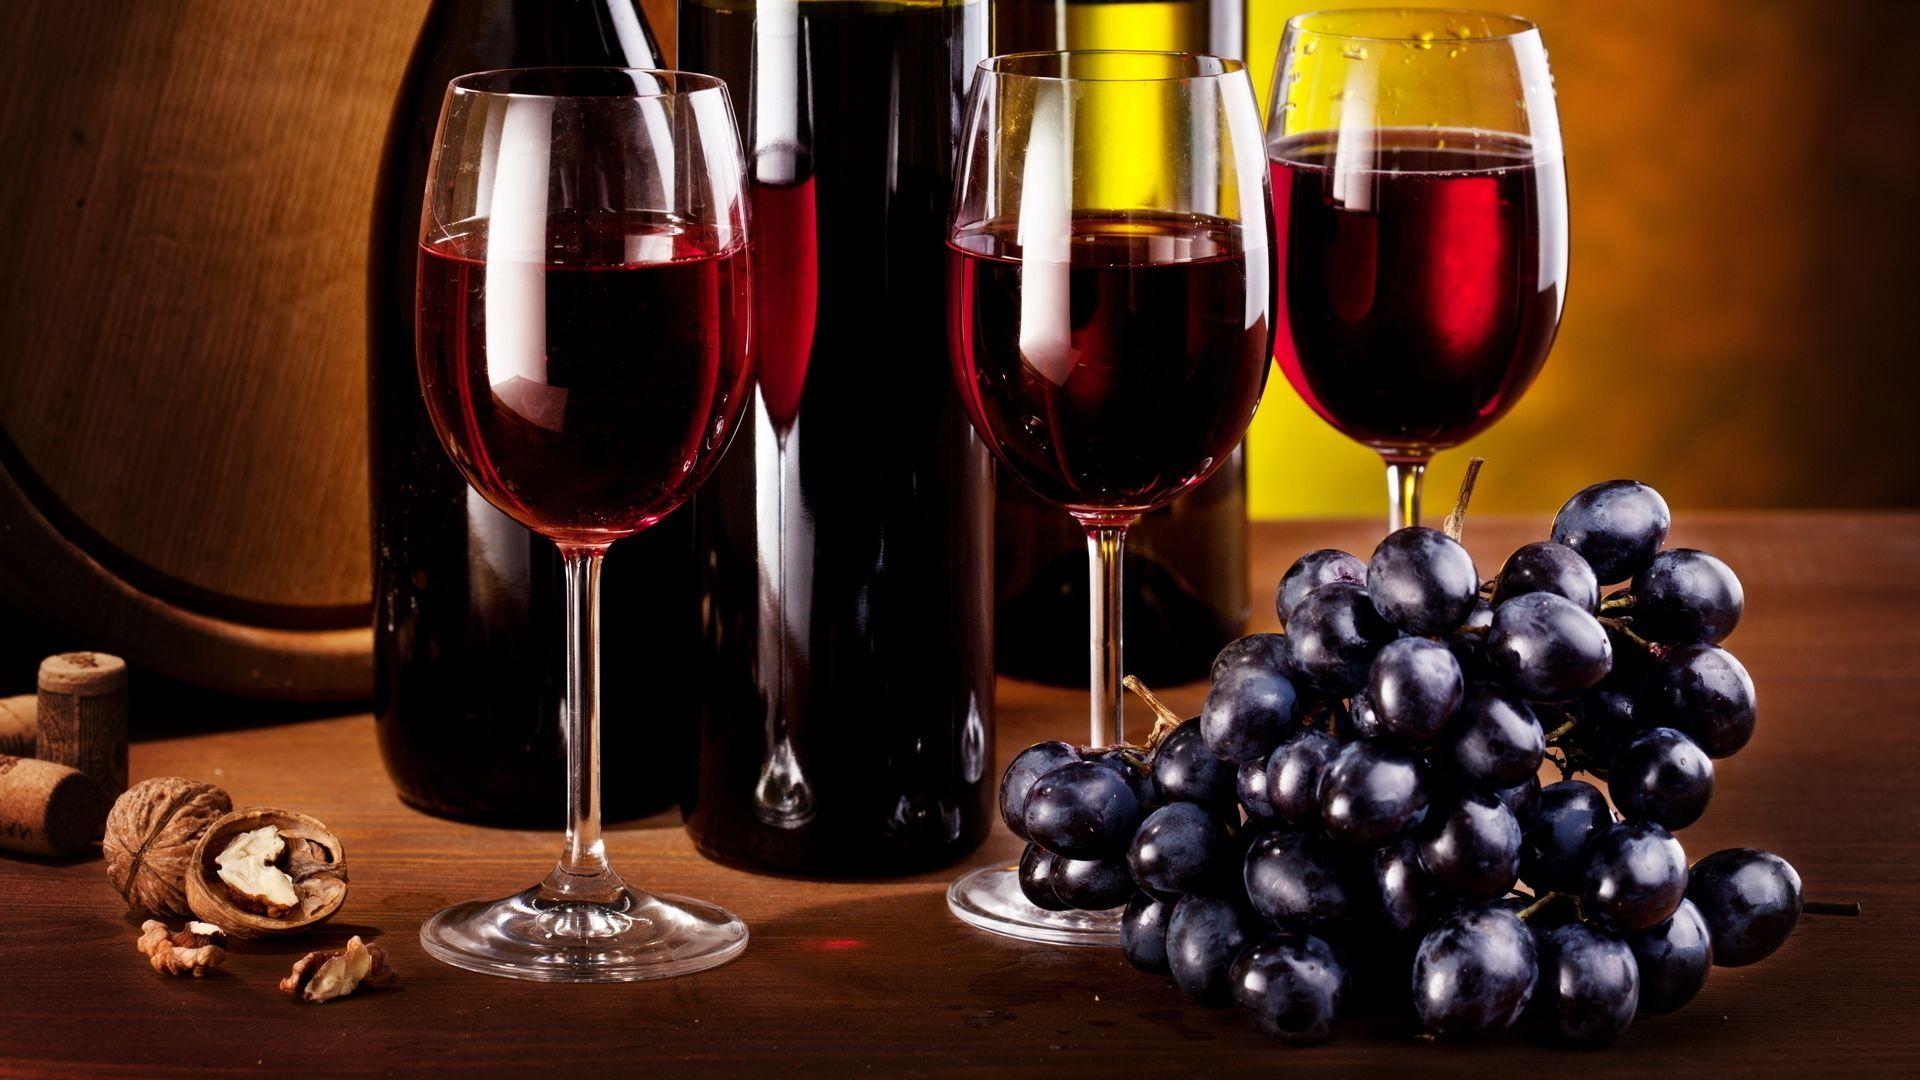 Download Wallpaper 1920x1080 wine, wine glasses, drink, bottles